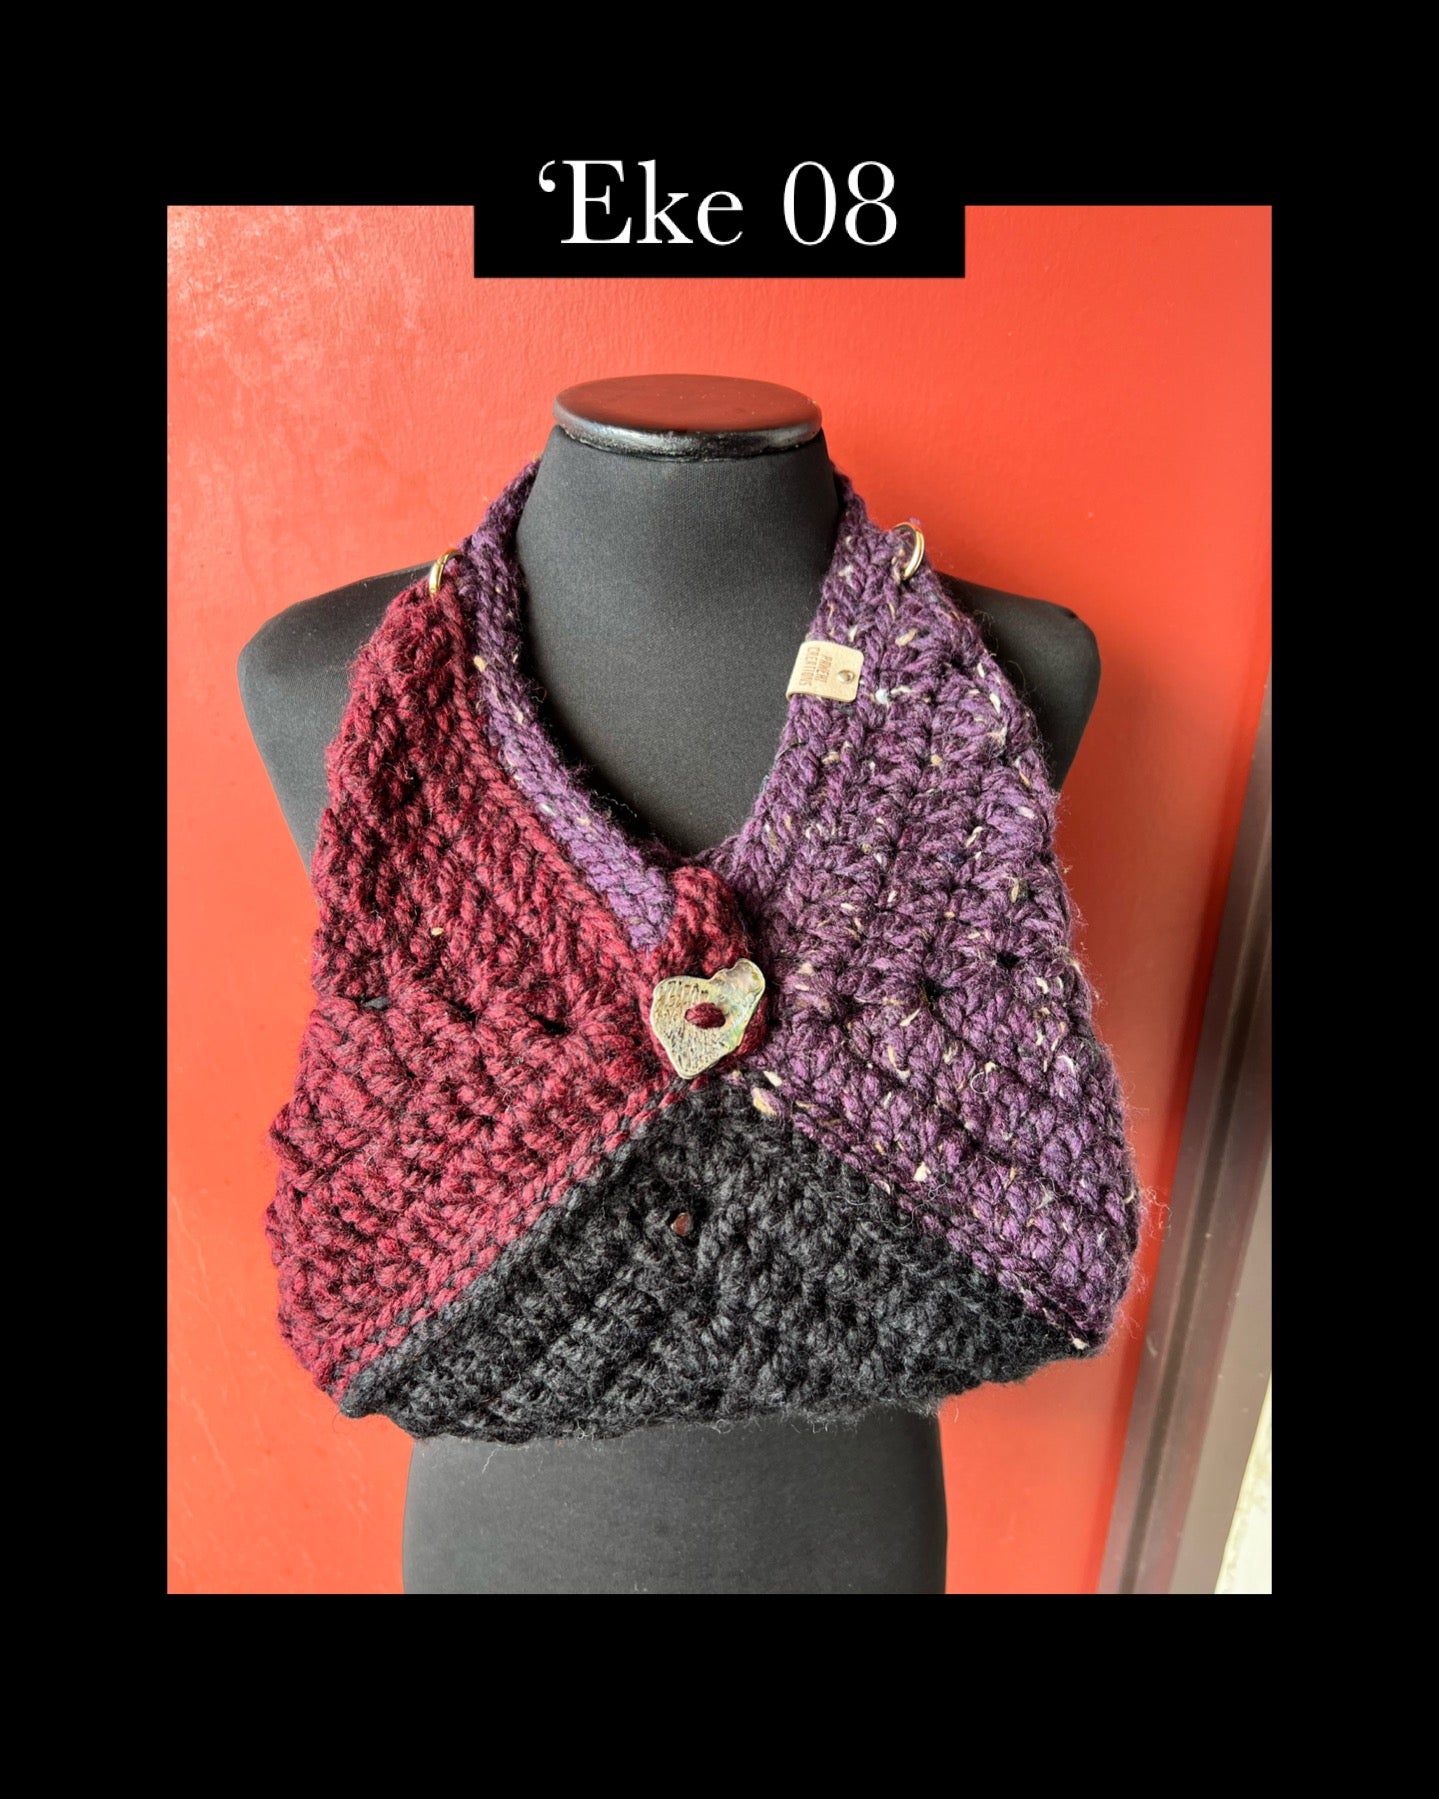 Pop-Up Mākeke - Pawehi Creations - Crochet Purse - ʻEke #08